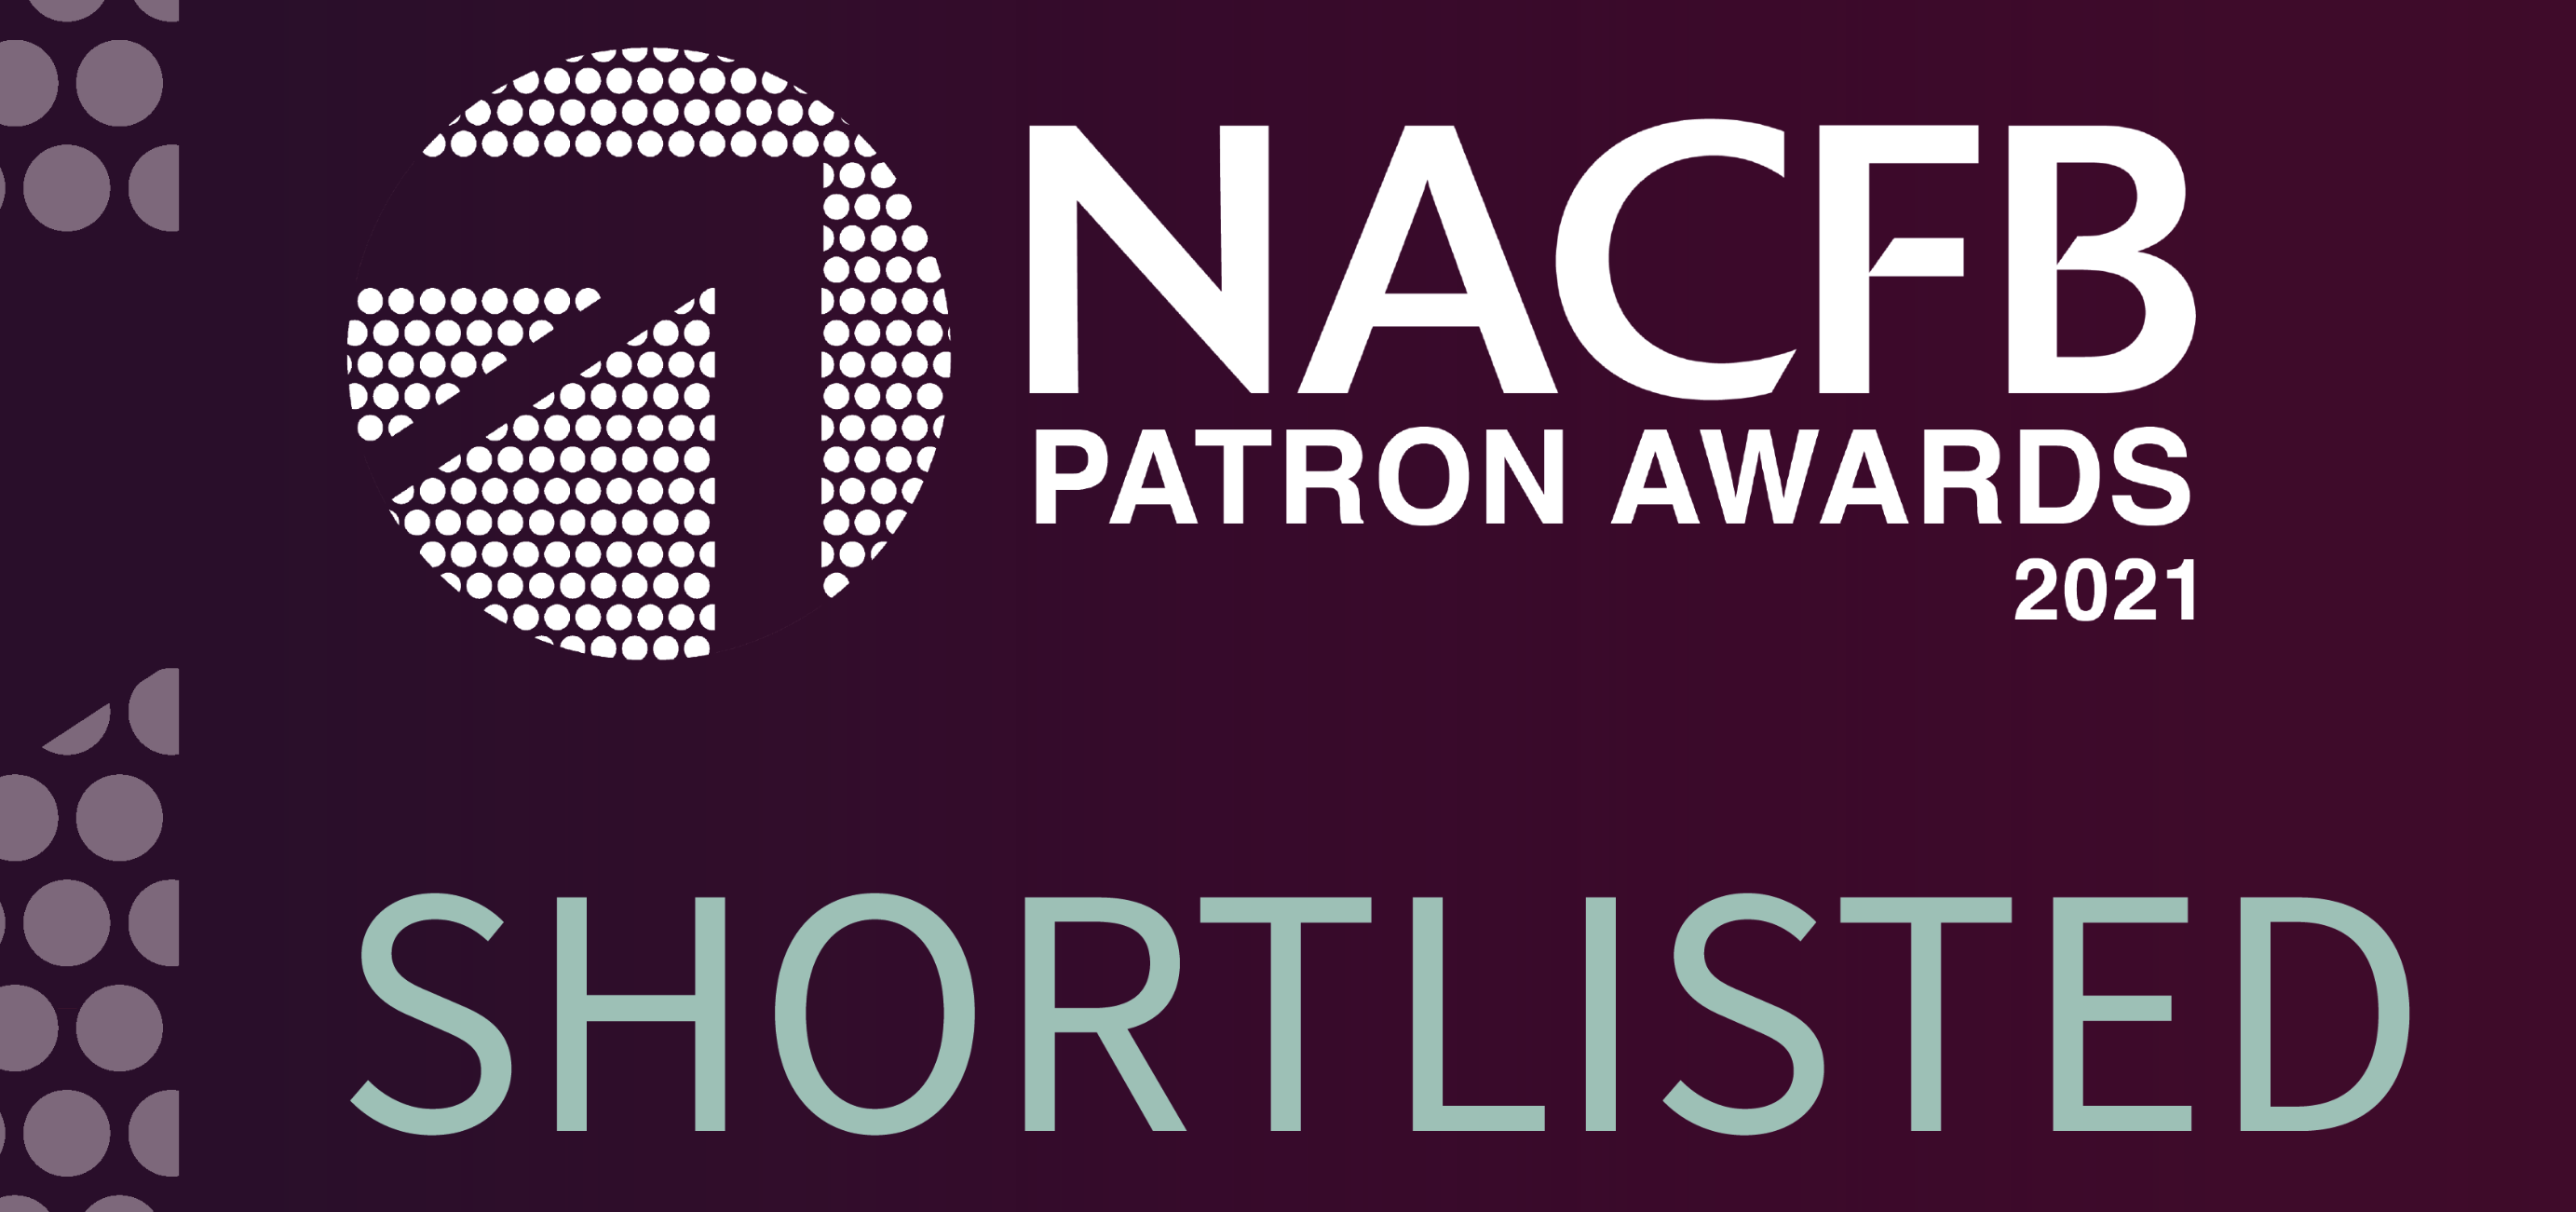 NACFB Patron Award 2021 Image, Shortlisted Company